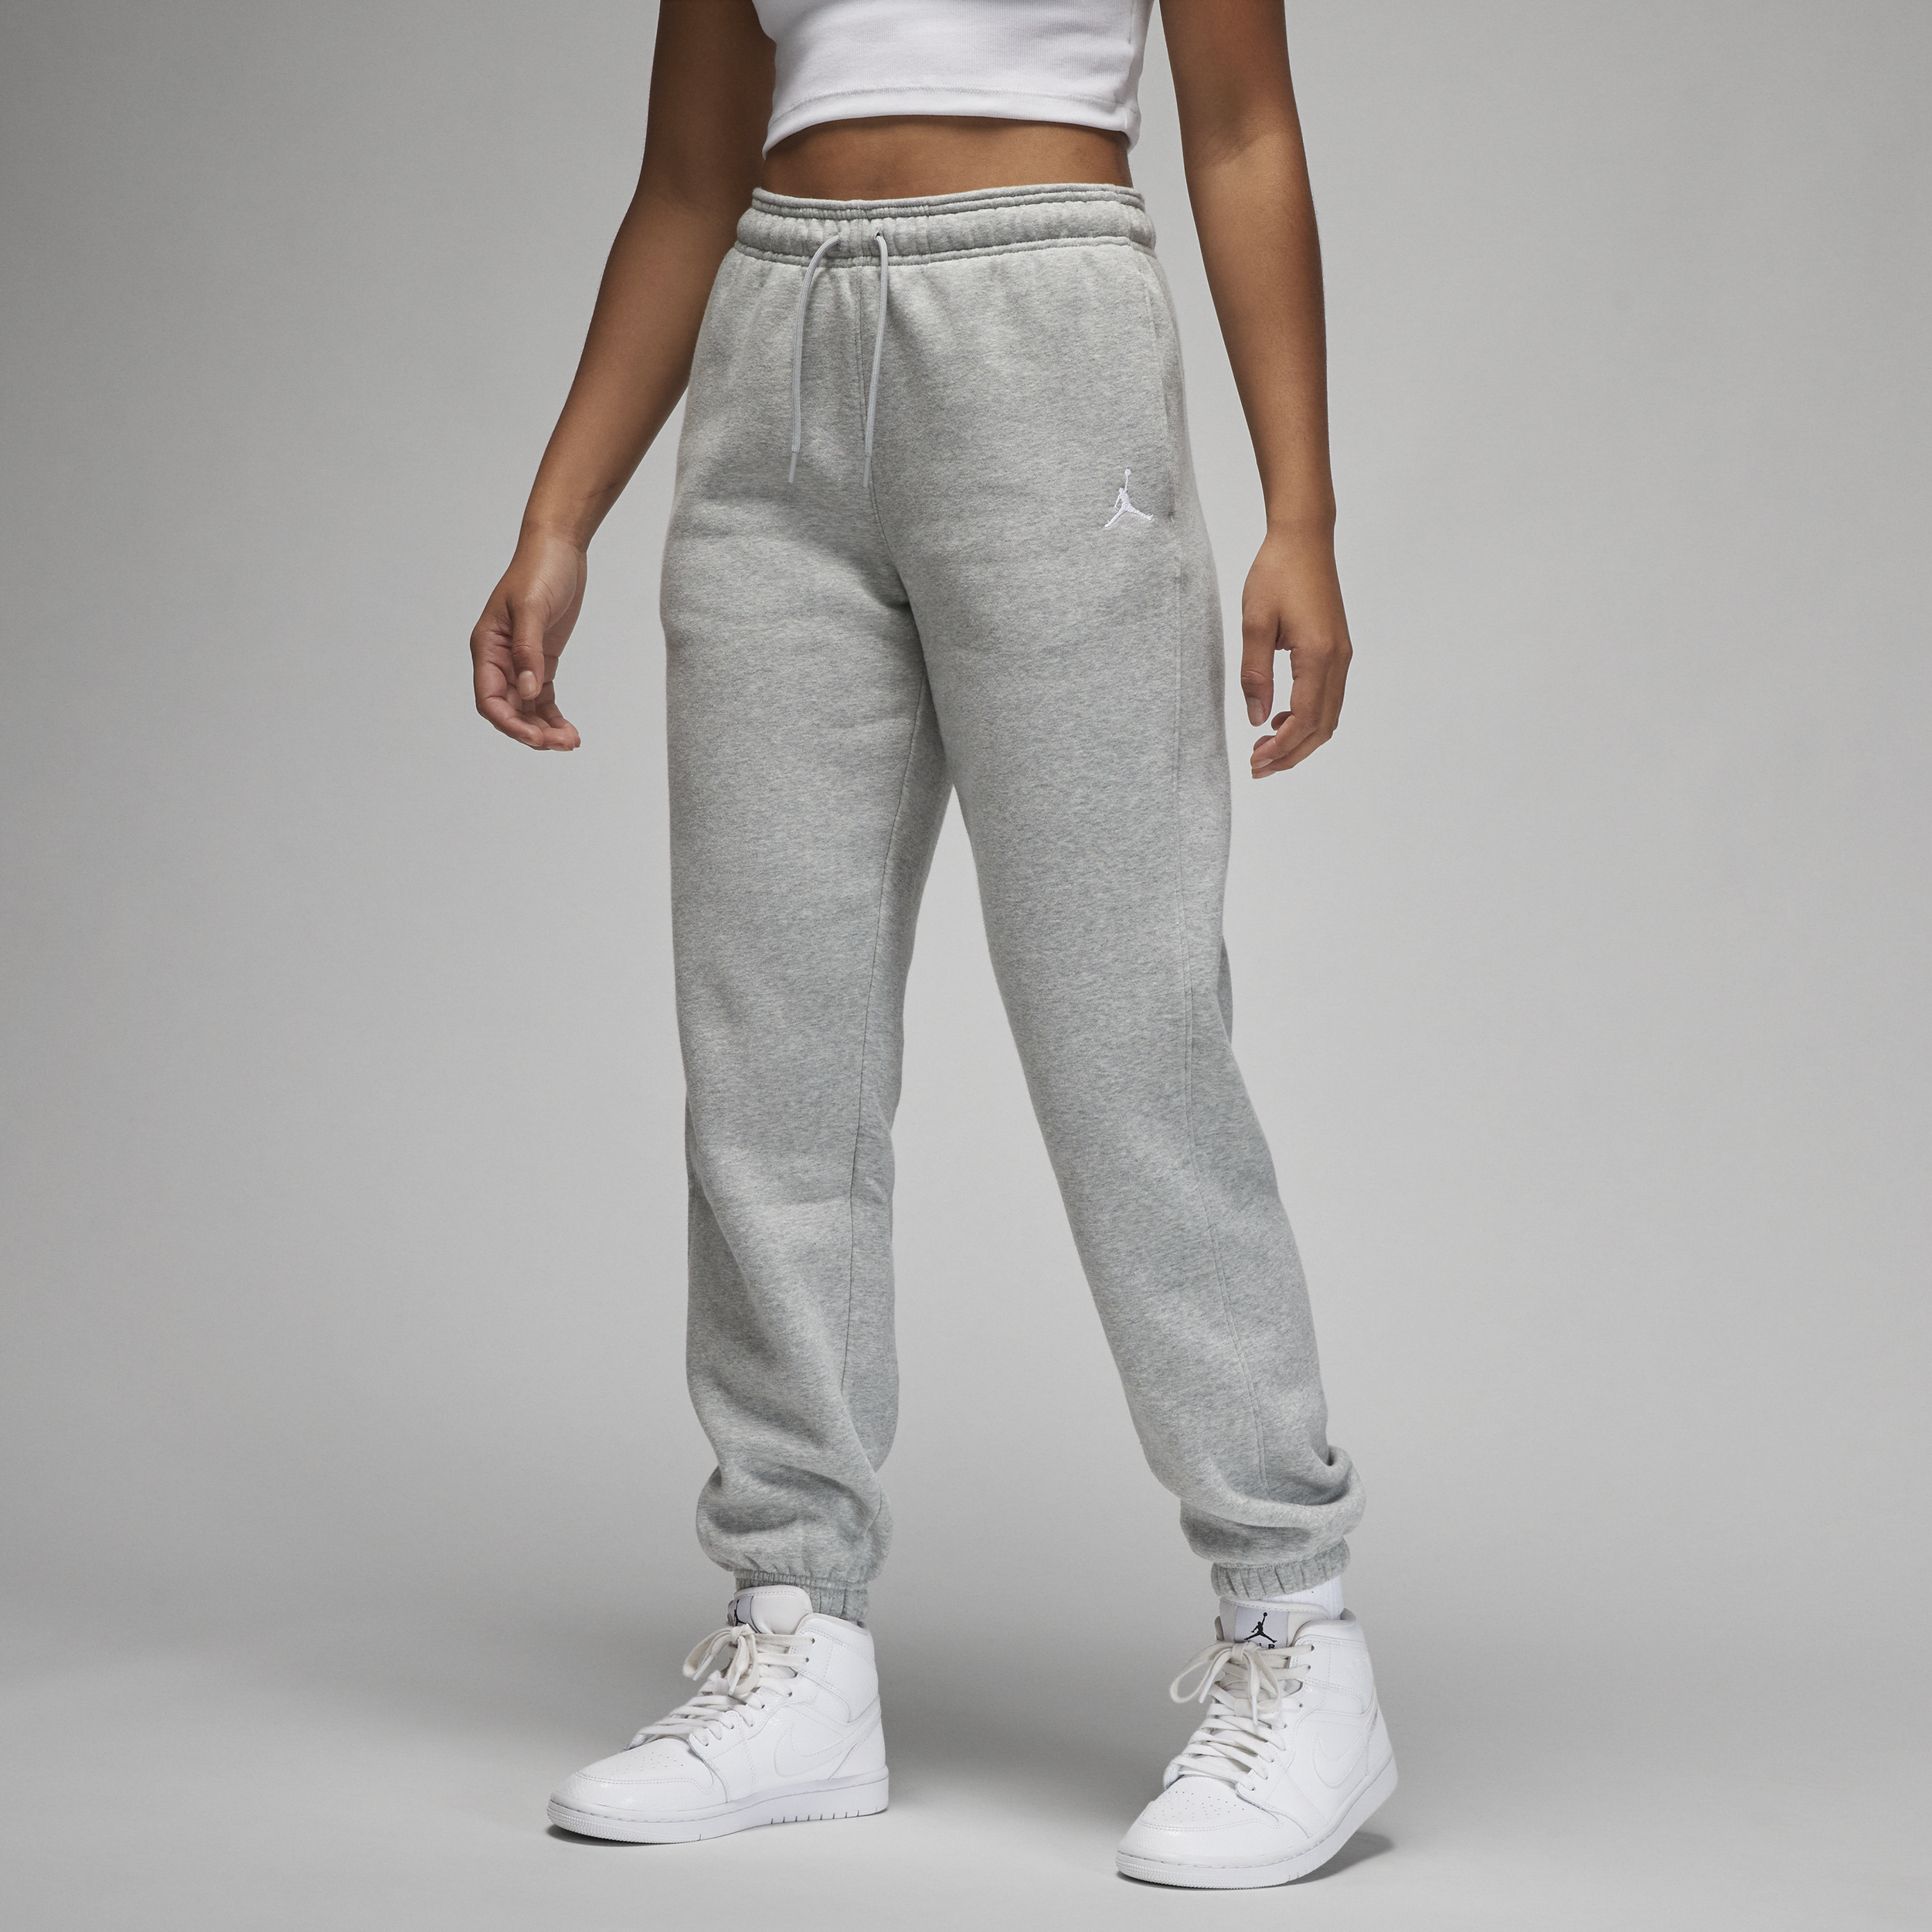 Jordan Brooklyn Fleece-bukser til kvinder - grå